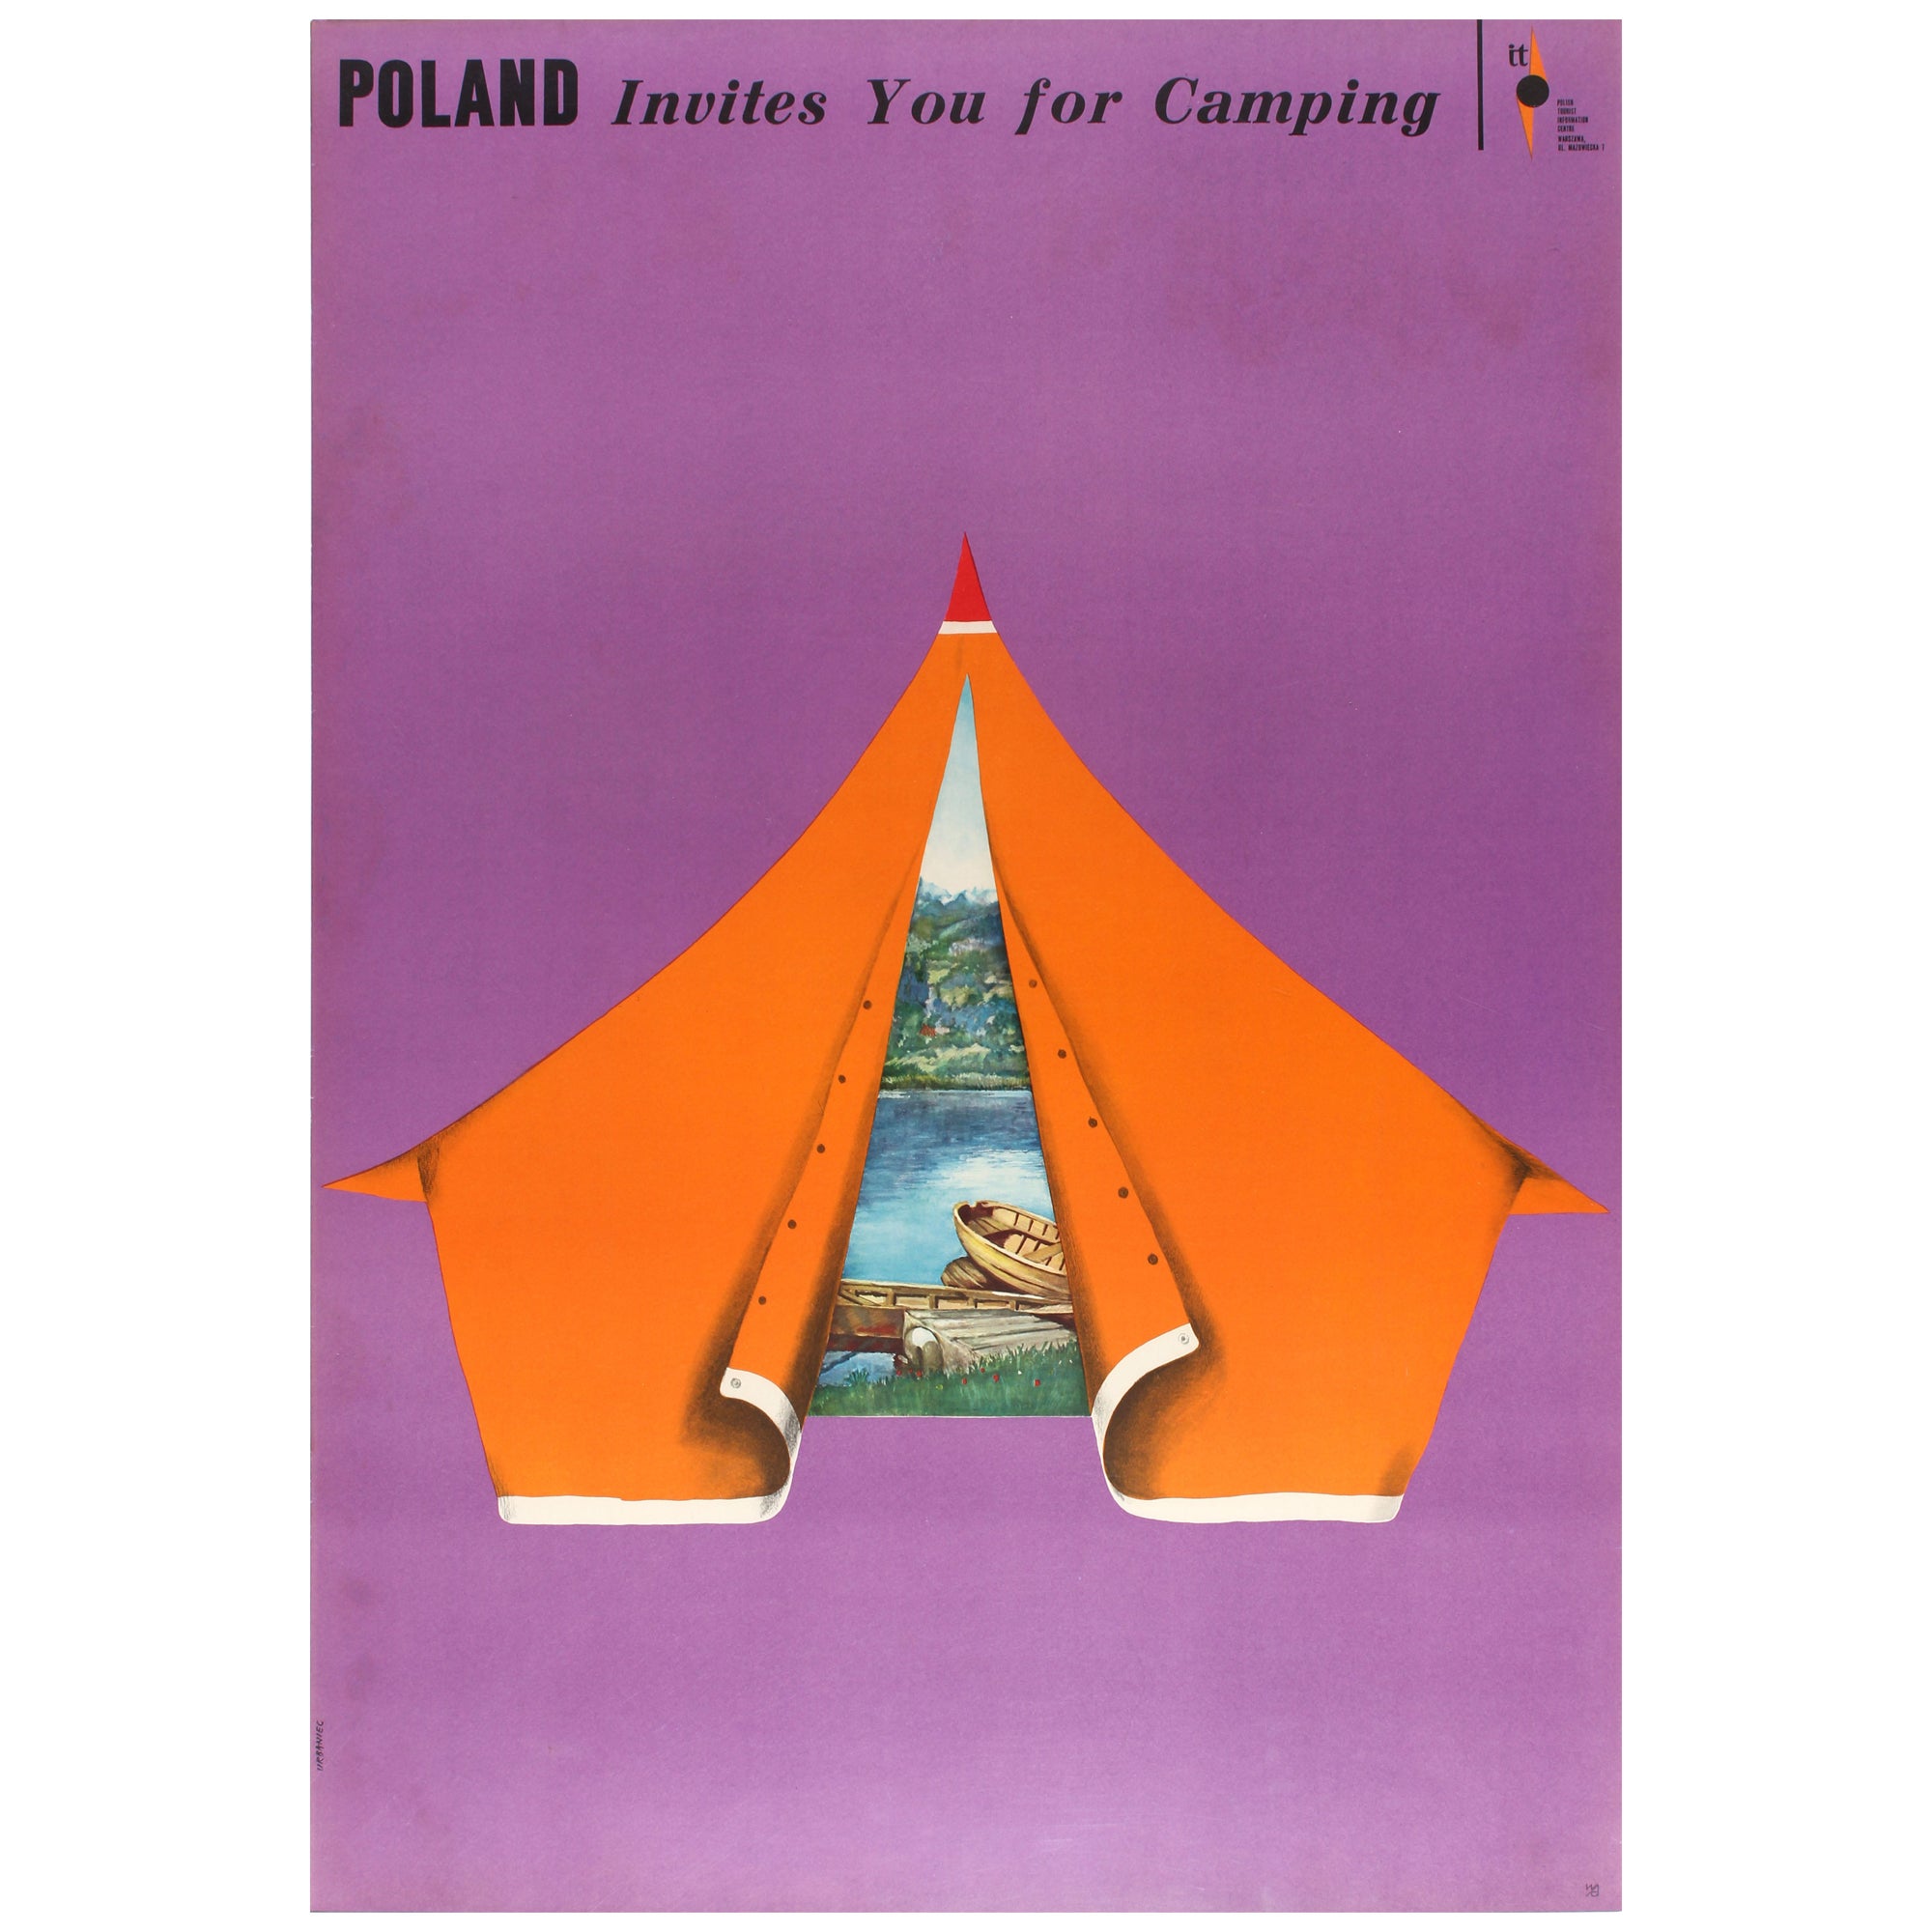 Original Vintage Travel Poster Poland Invites You Camping Tent Maciej Urbaniec